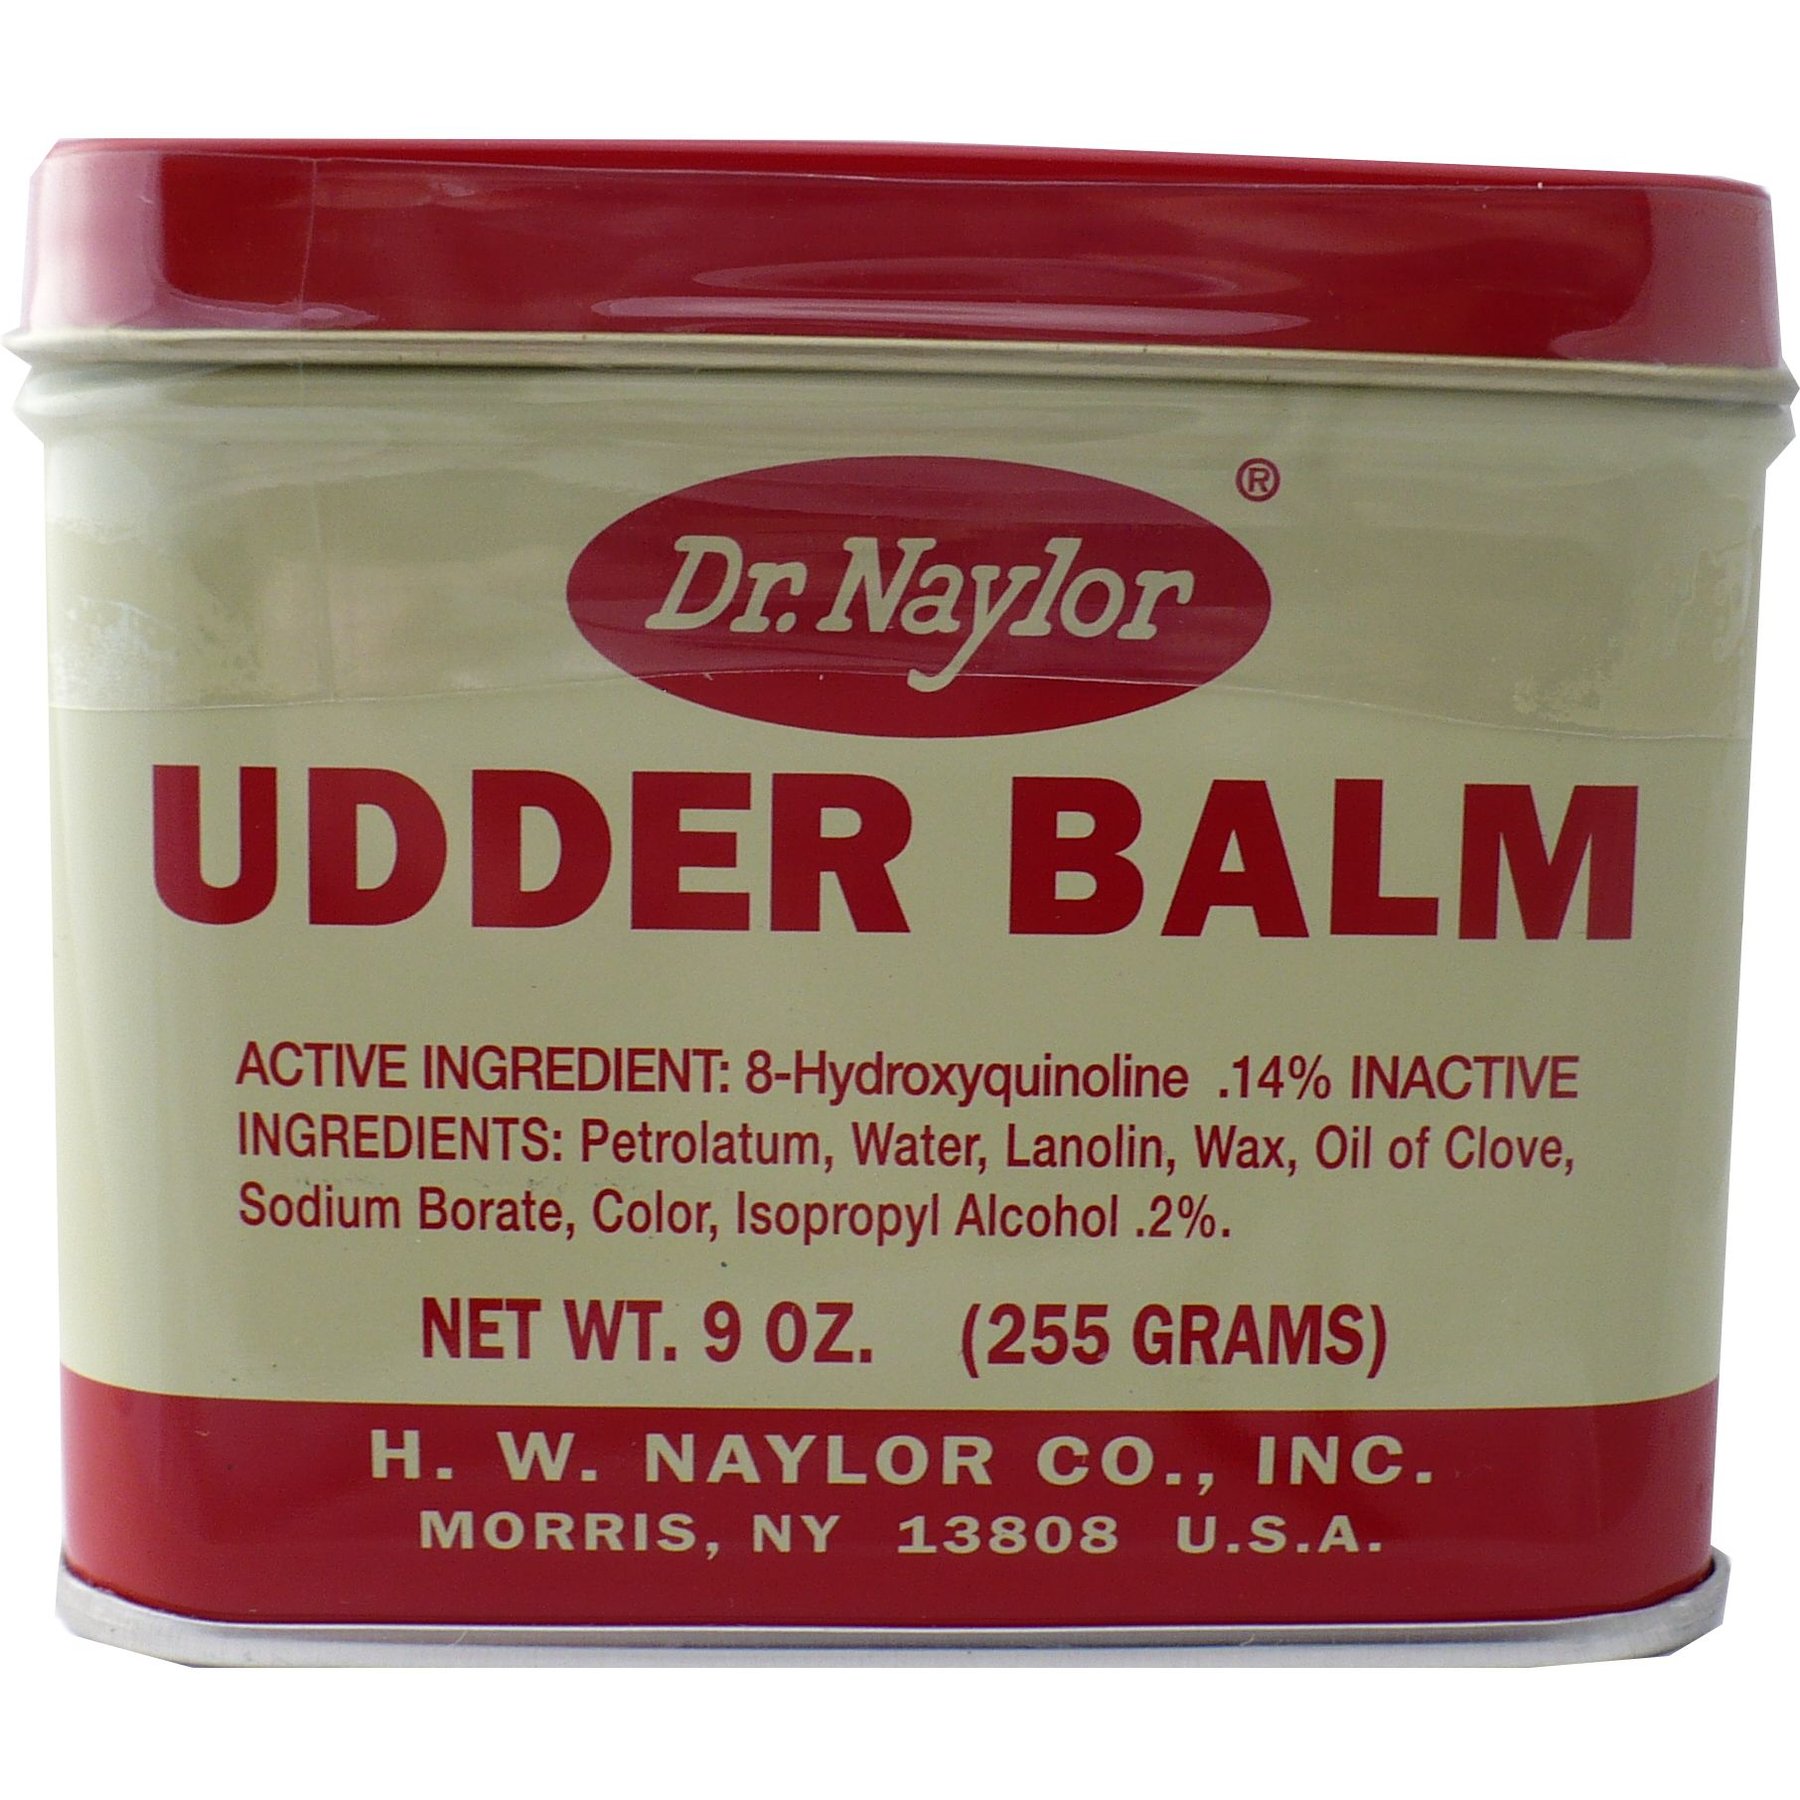 Dr Naylor Blu-Kote Antiseptic Pump Spray 4 Ounce